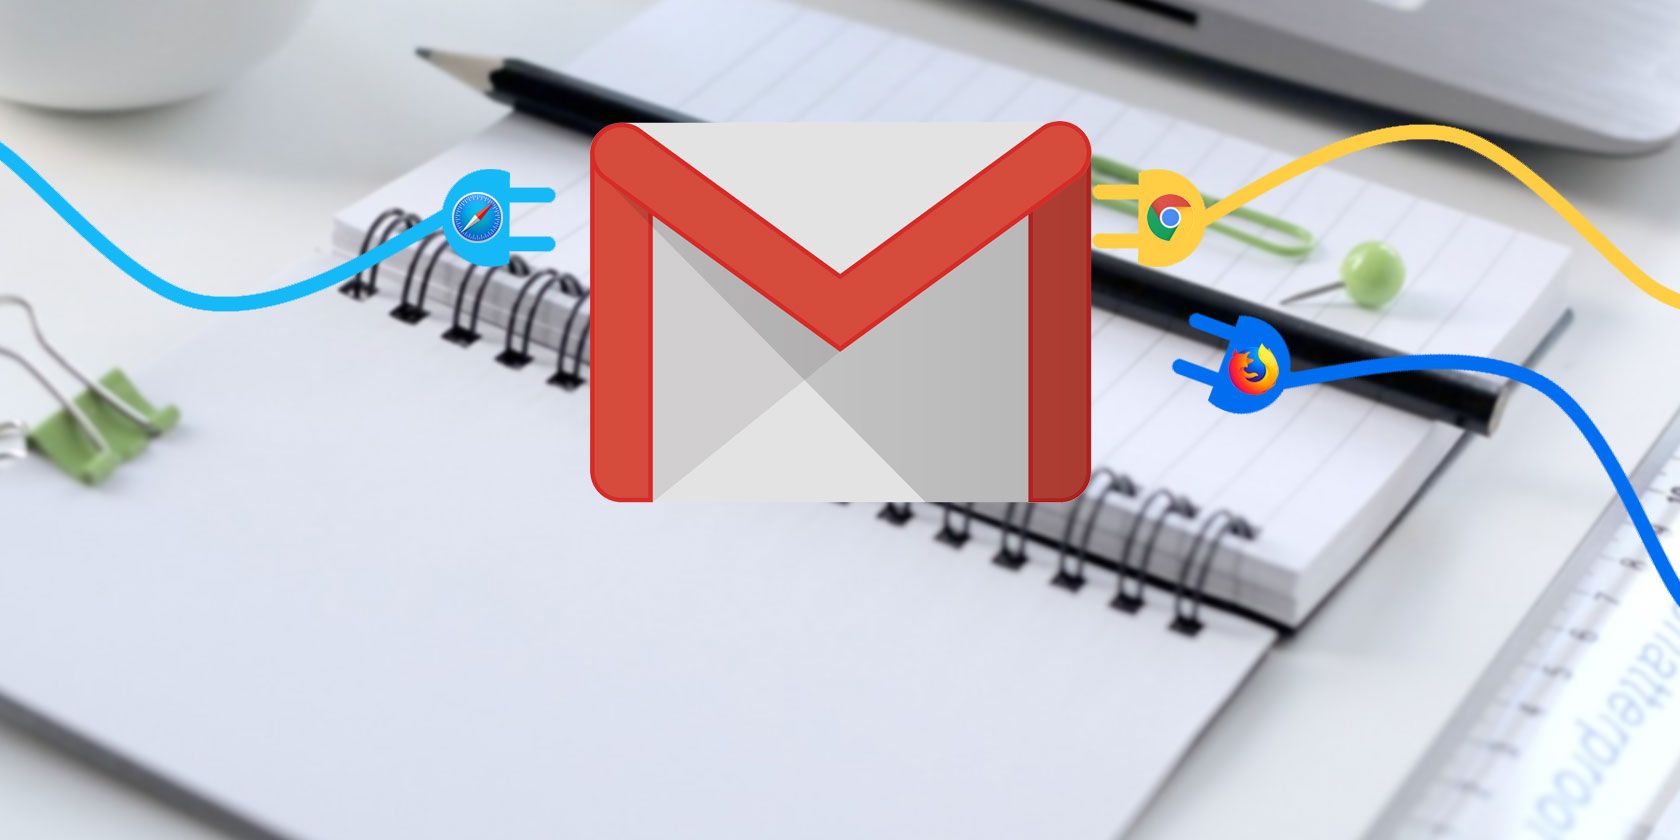 mac oscreate email alias for gmail